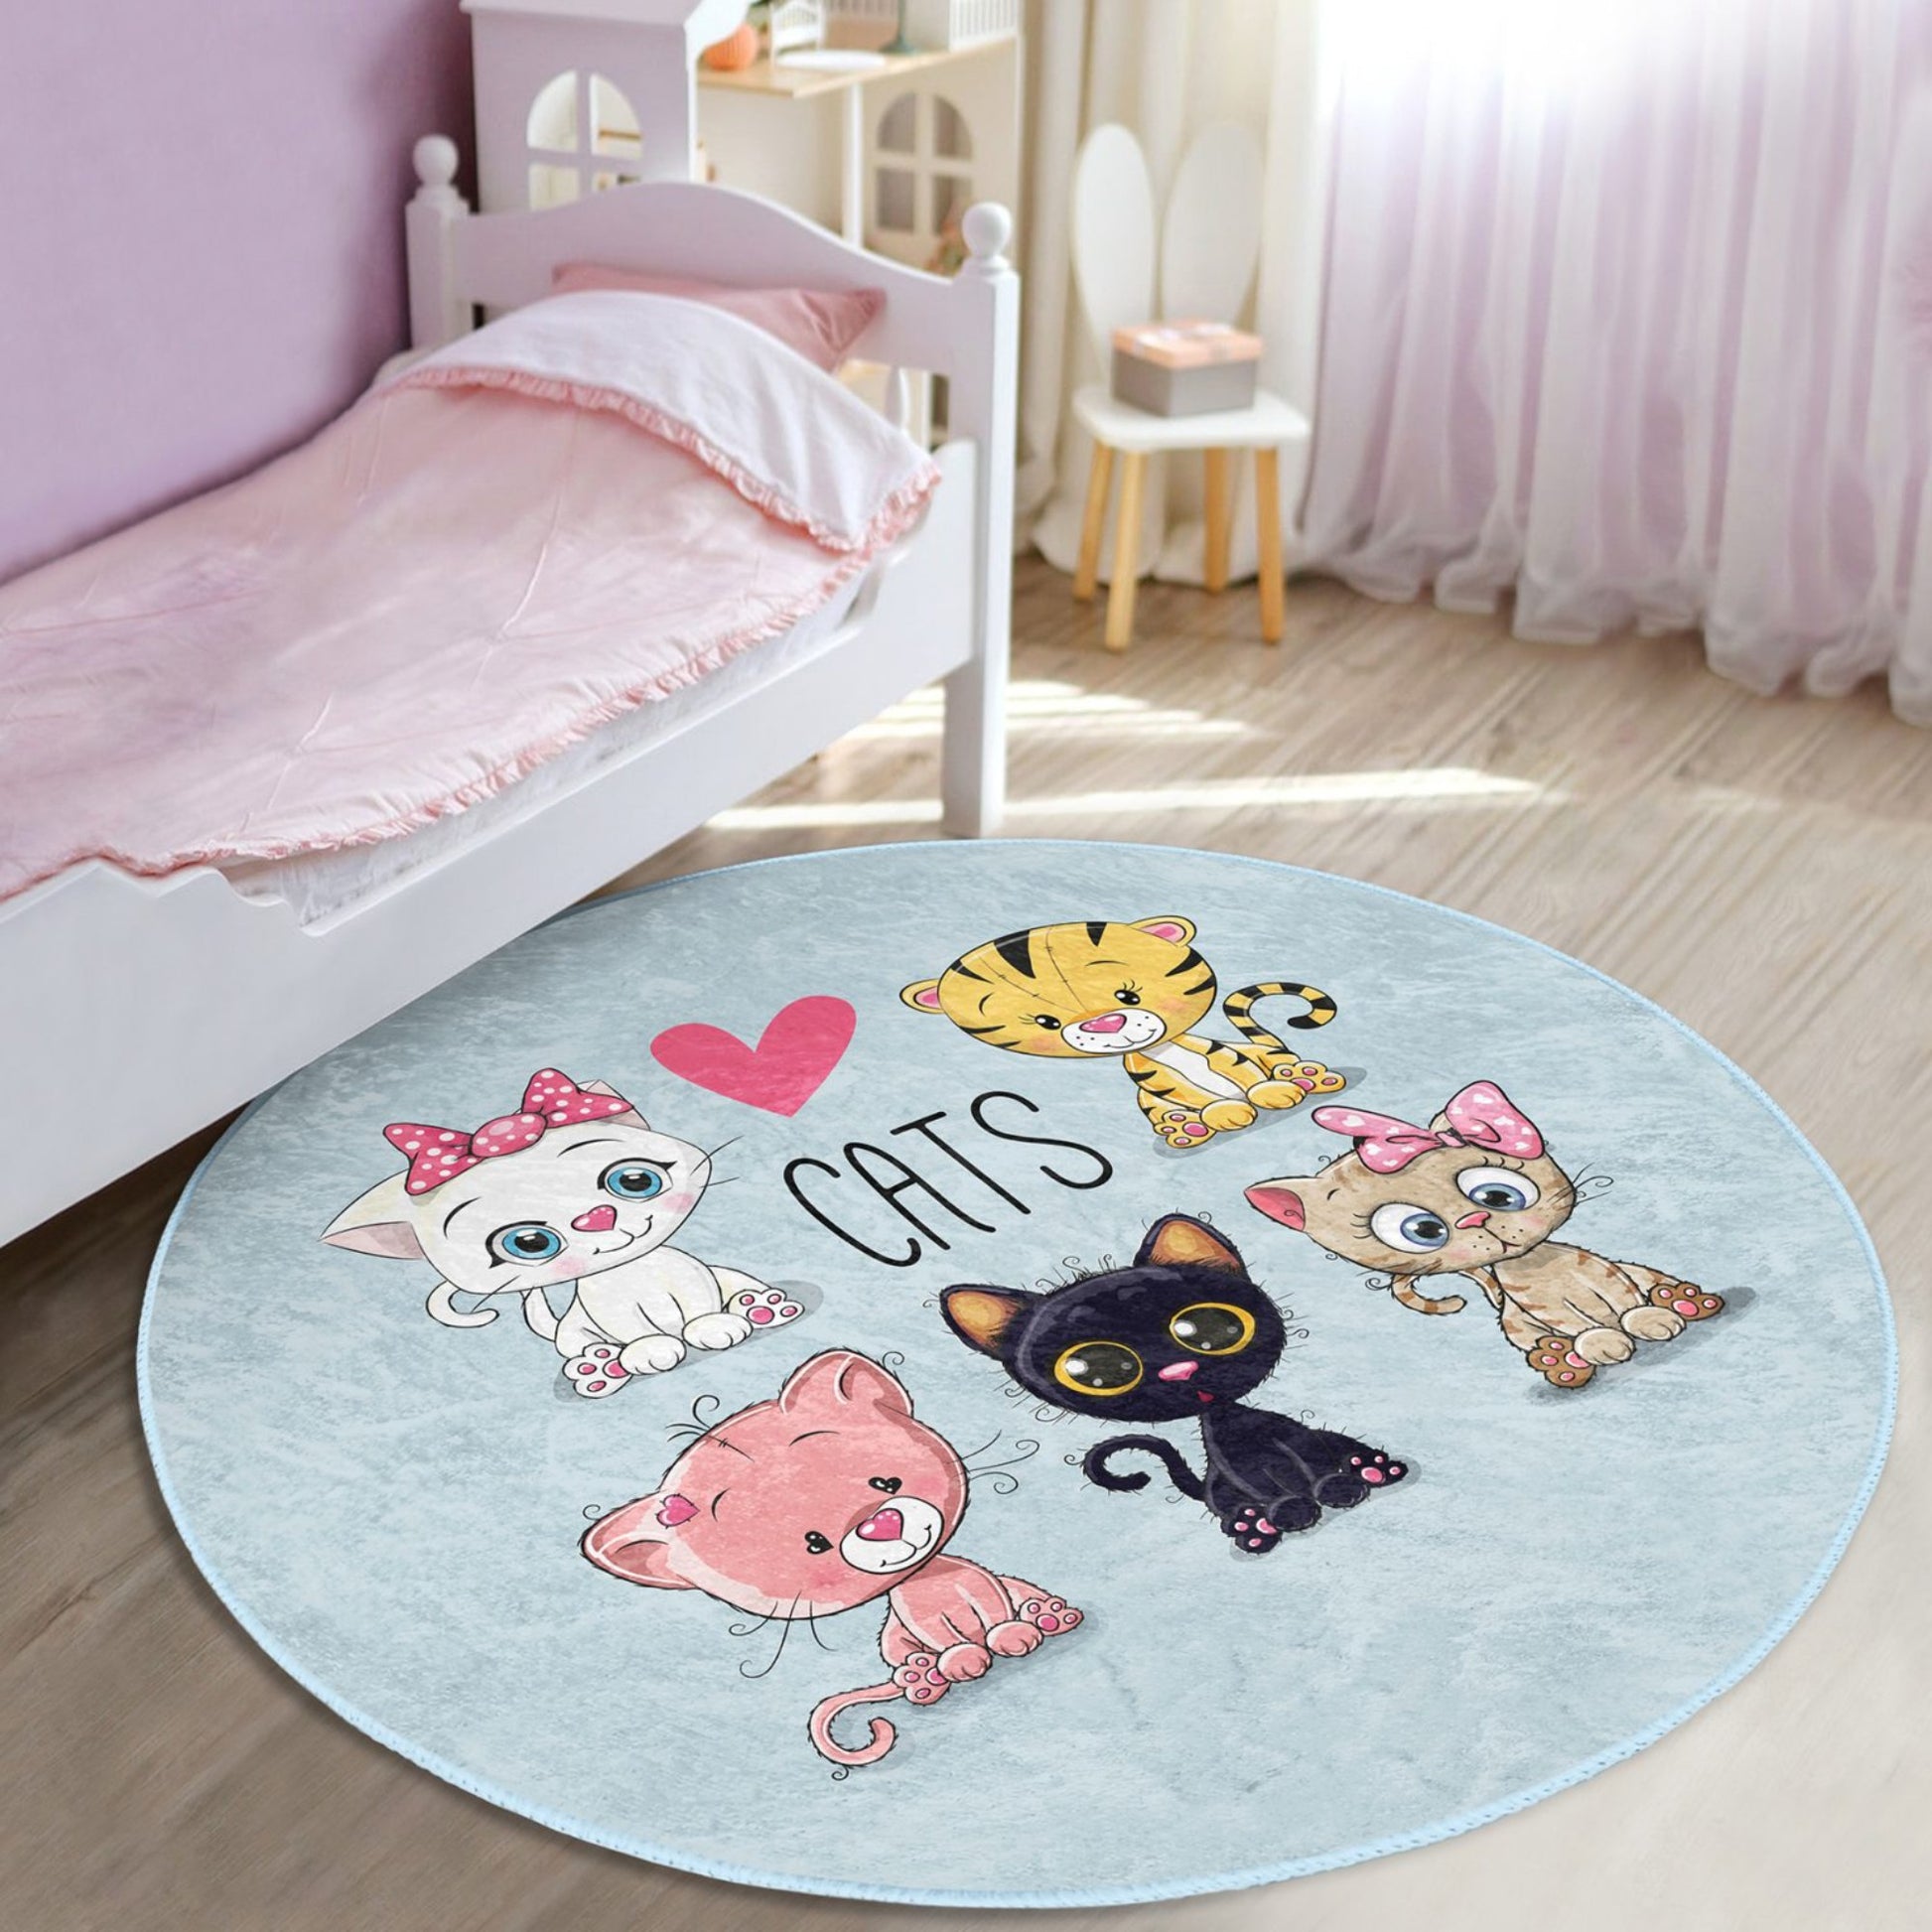 Playful Kitty Nursery Carpet - Whimsical Design